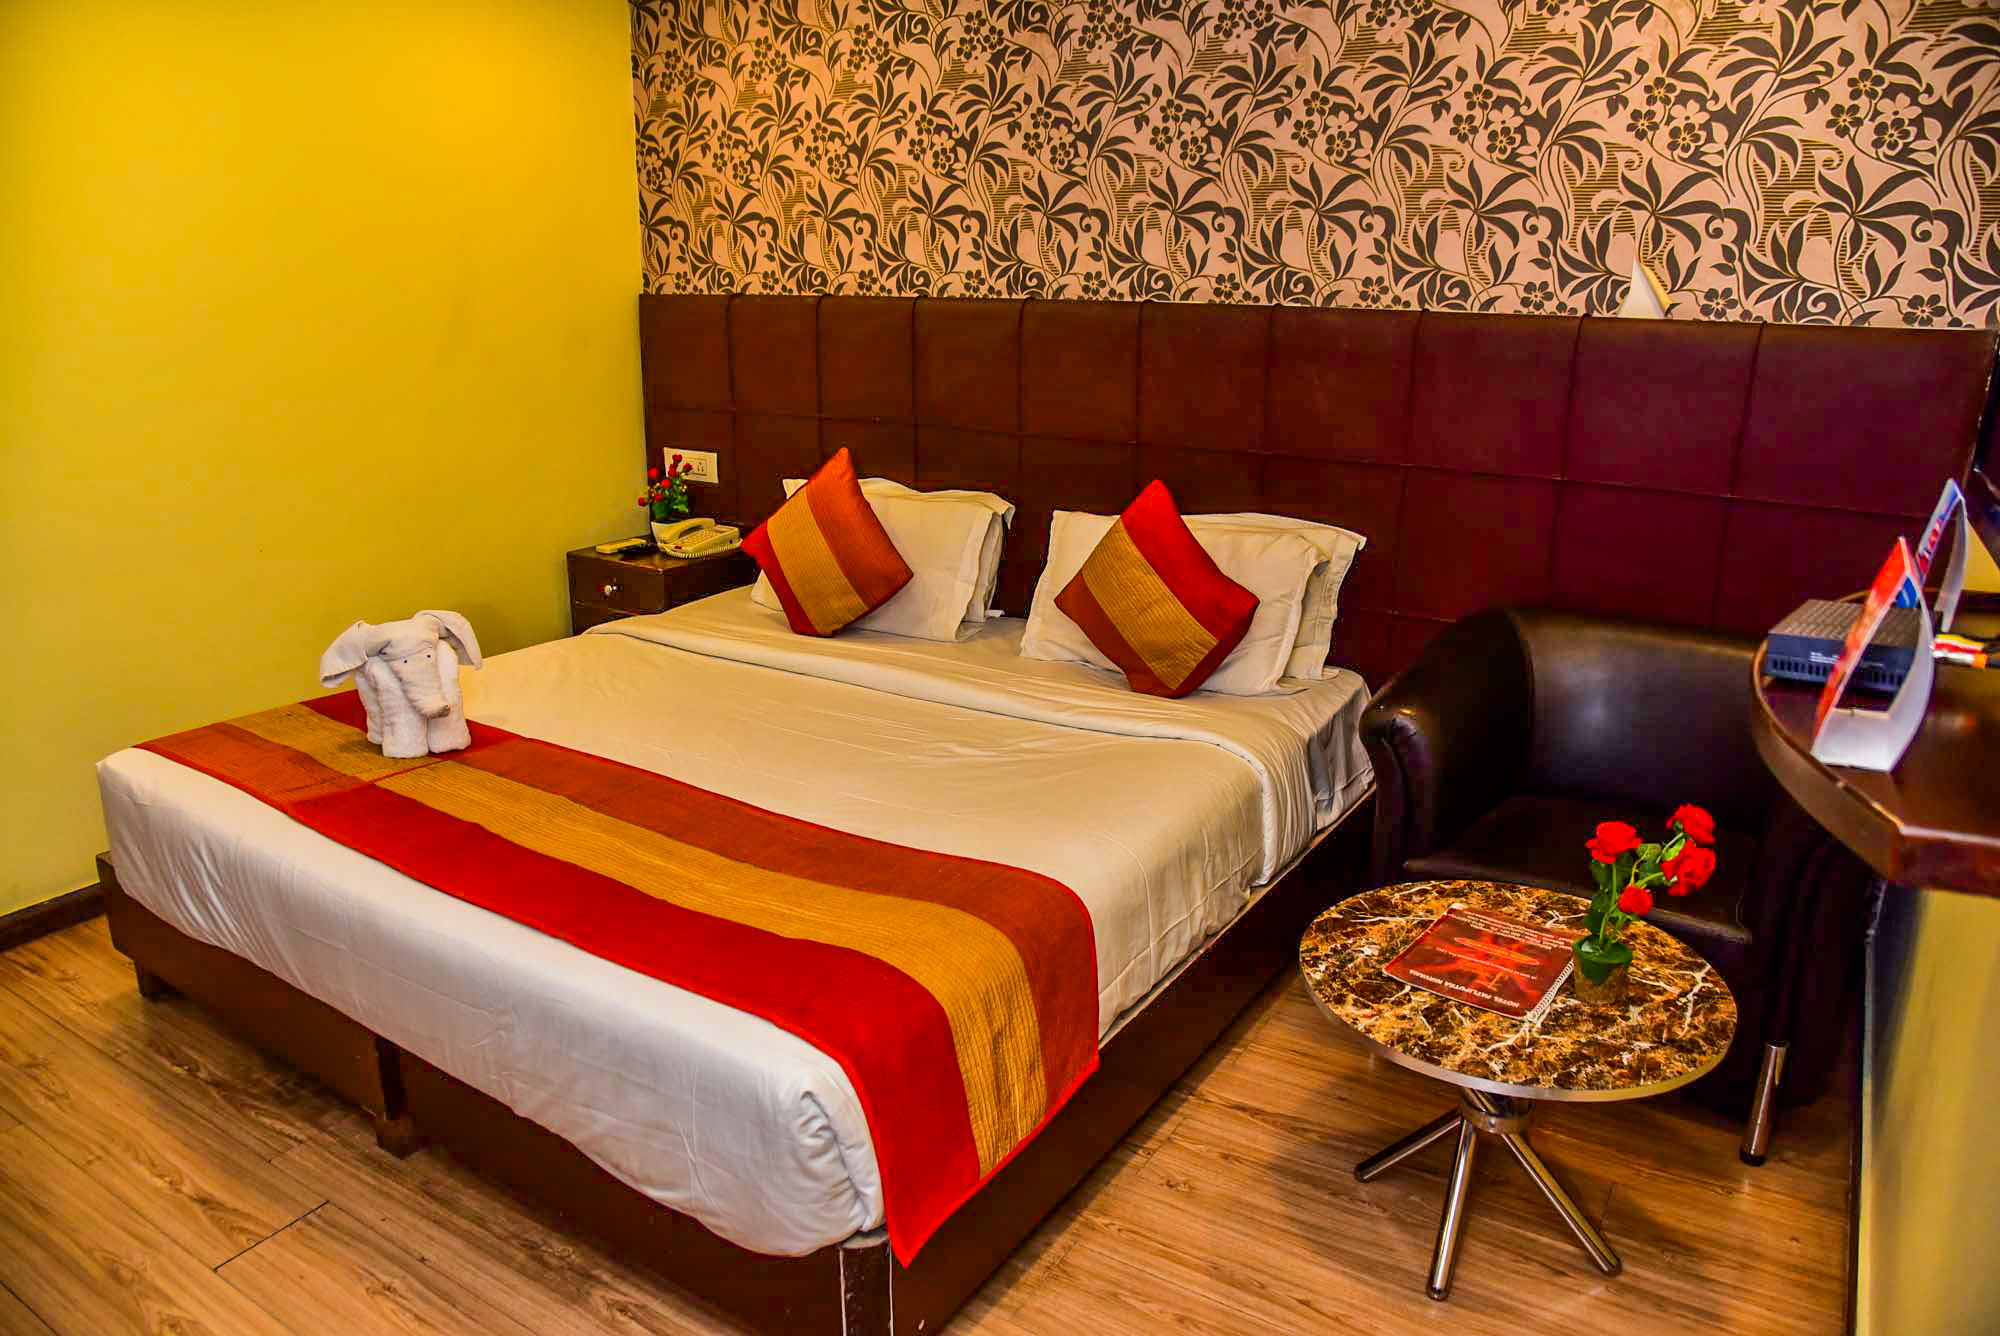 Standard Rooms in Patna of Hotel Patliputra nirvana images